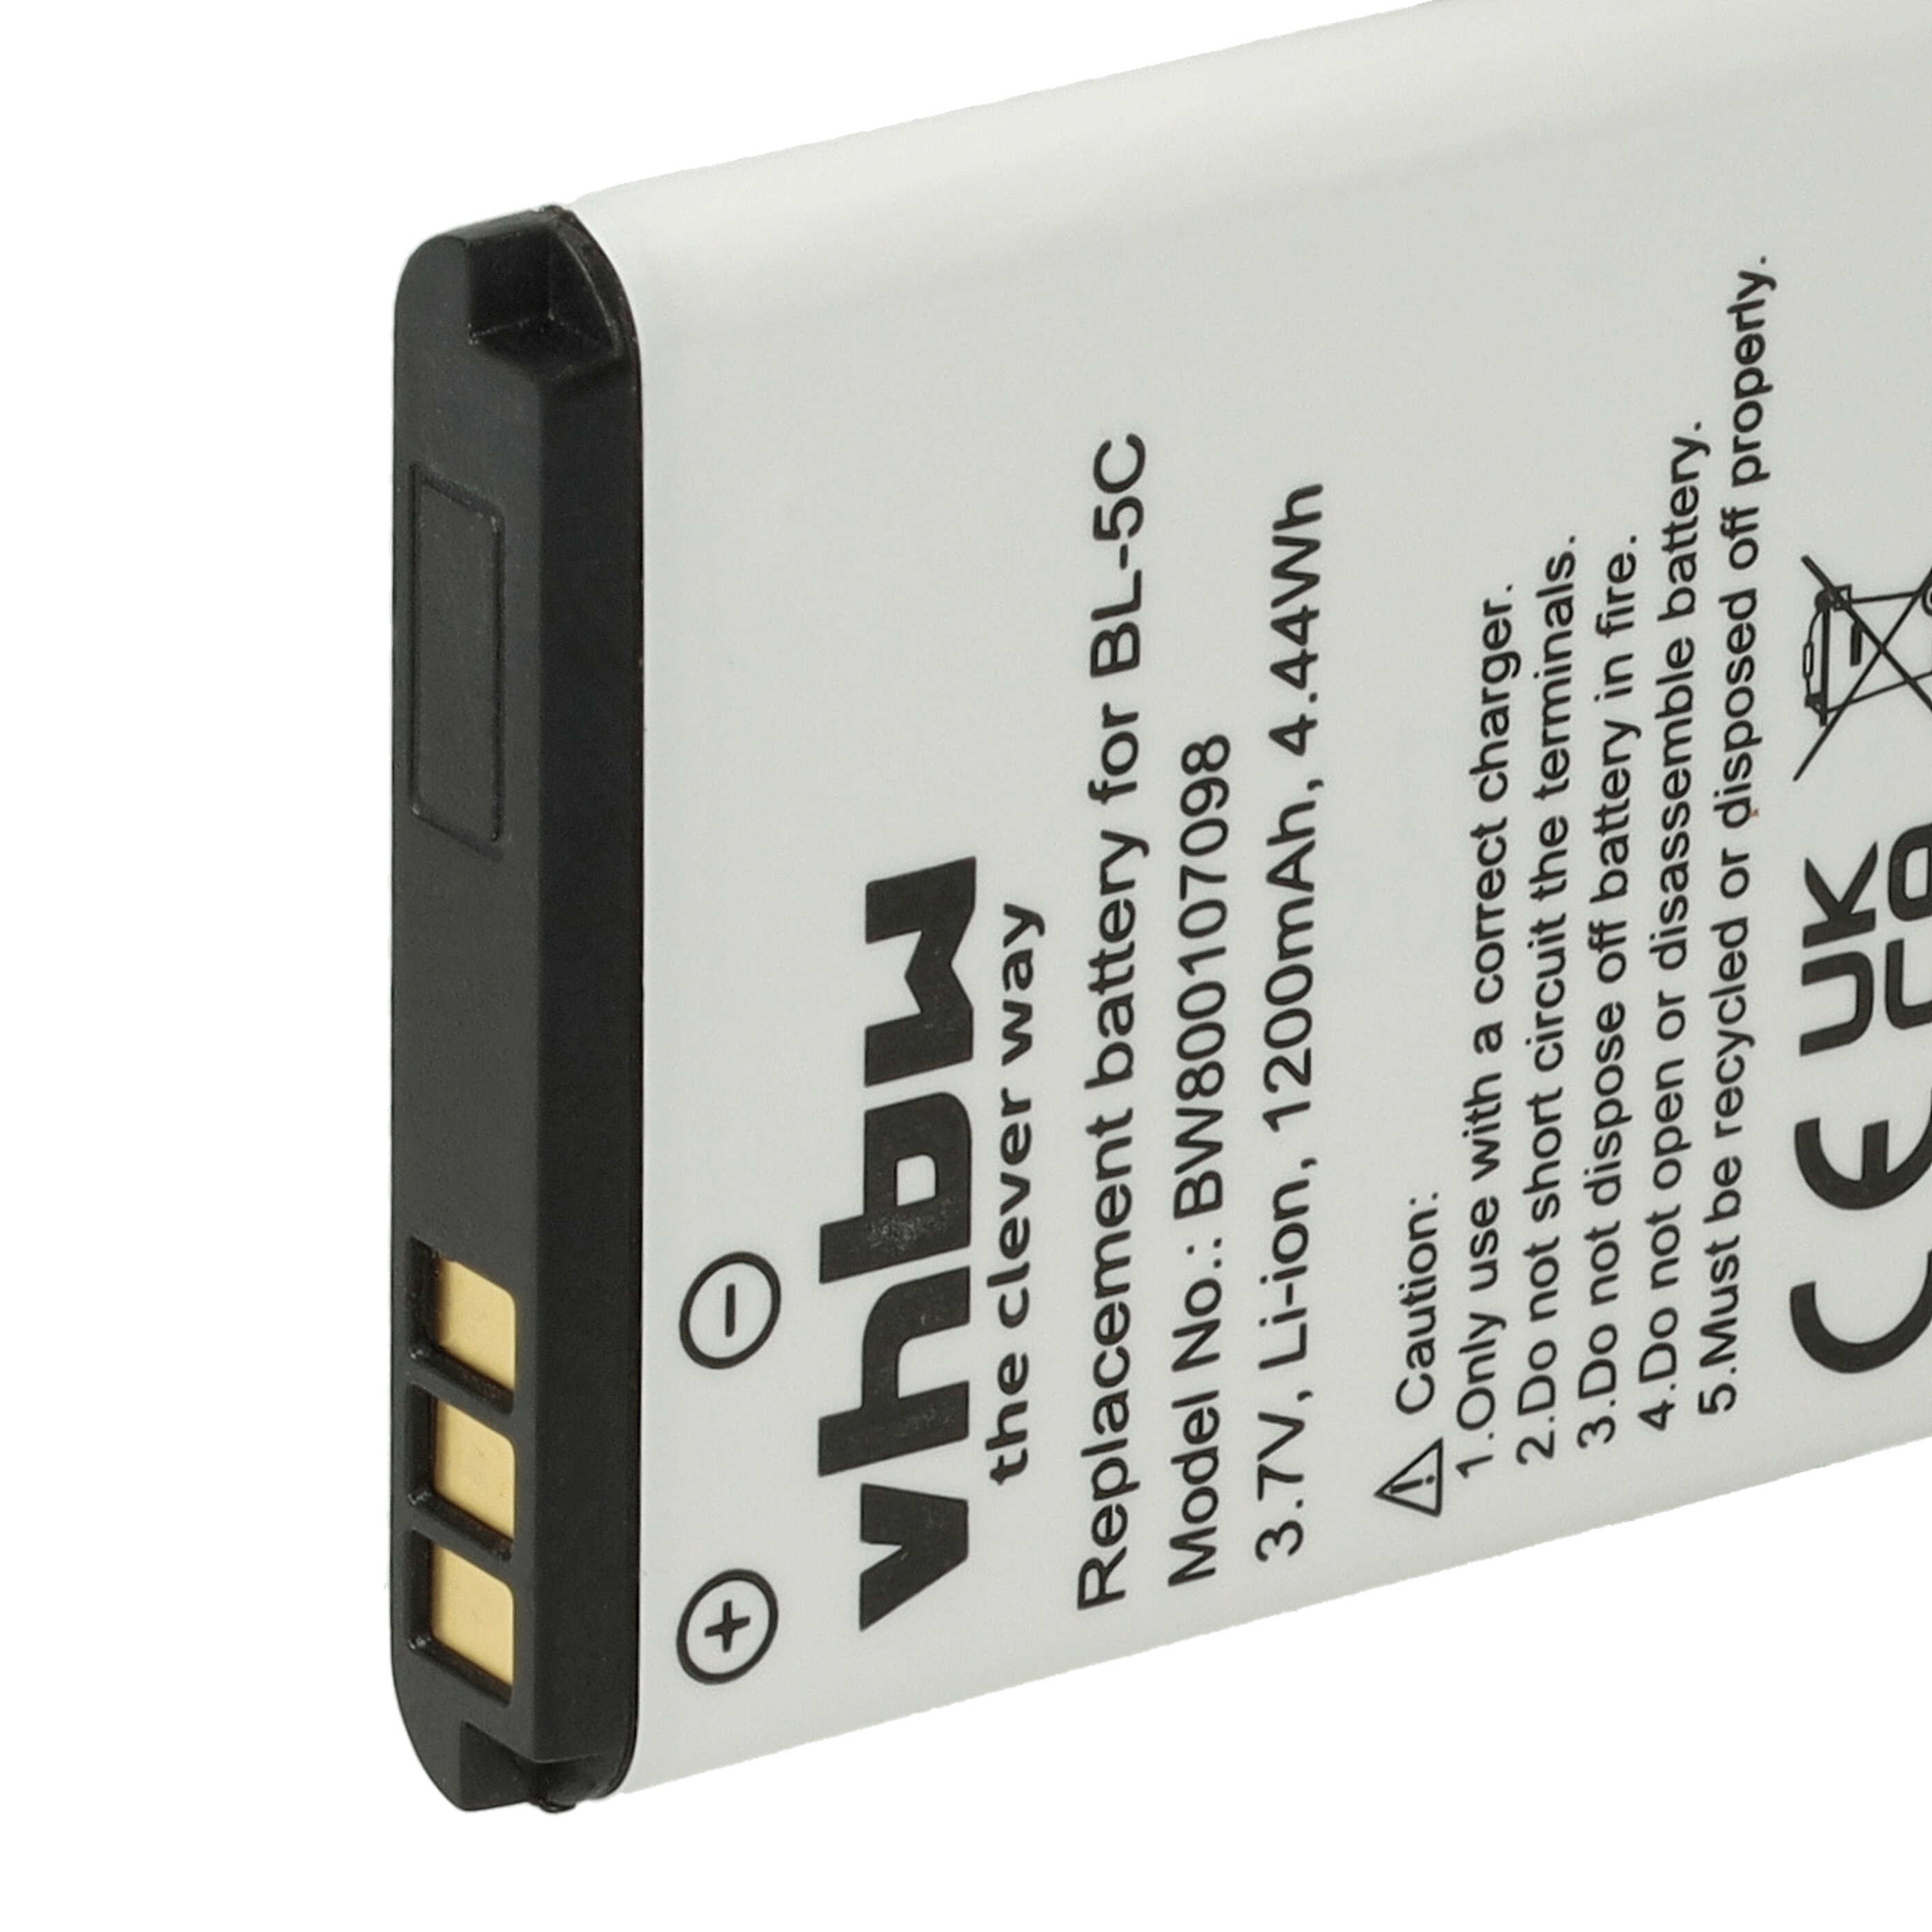 Akumulator bateria do telefonu smartfona zam. MP-S-A1, RCB215, BS-16 - 1200mAh, 3,7V, Li-Ion